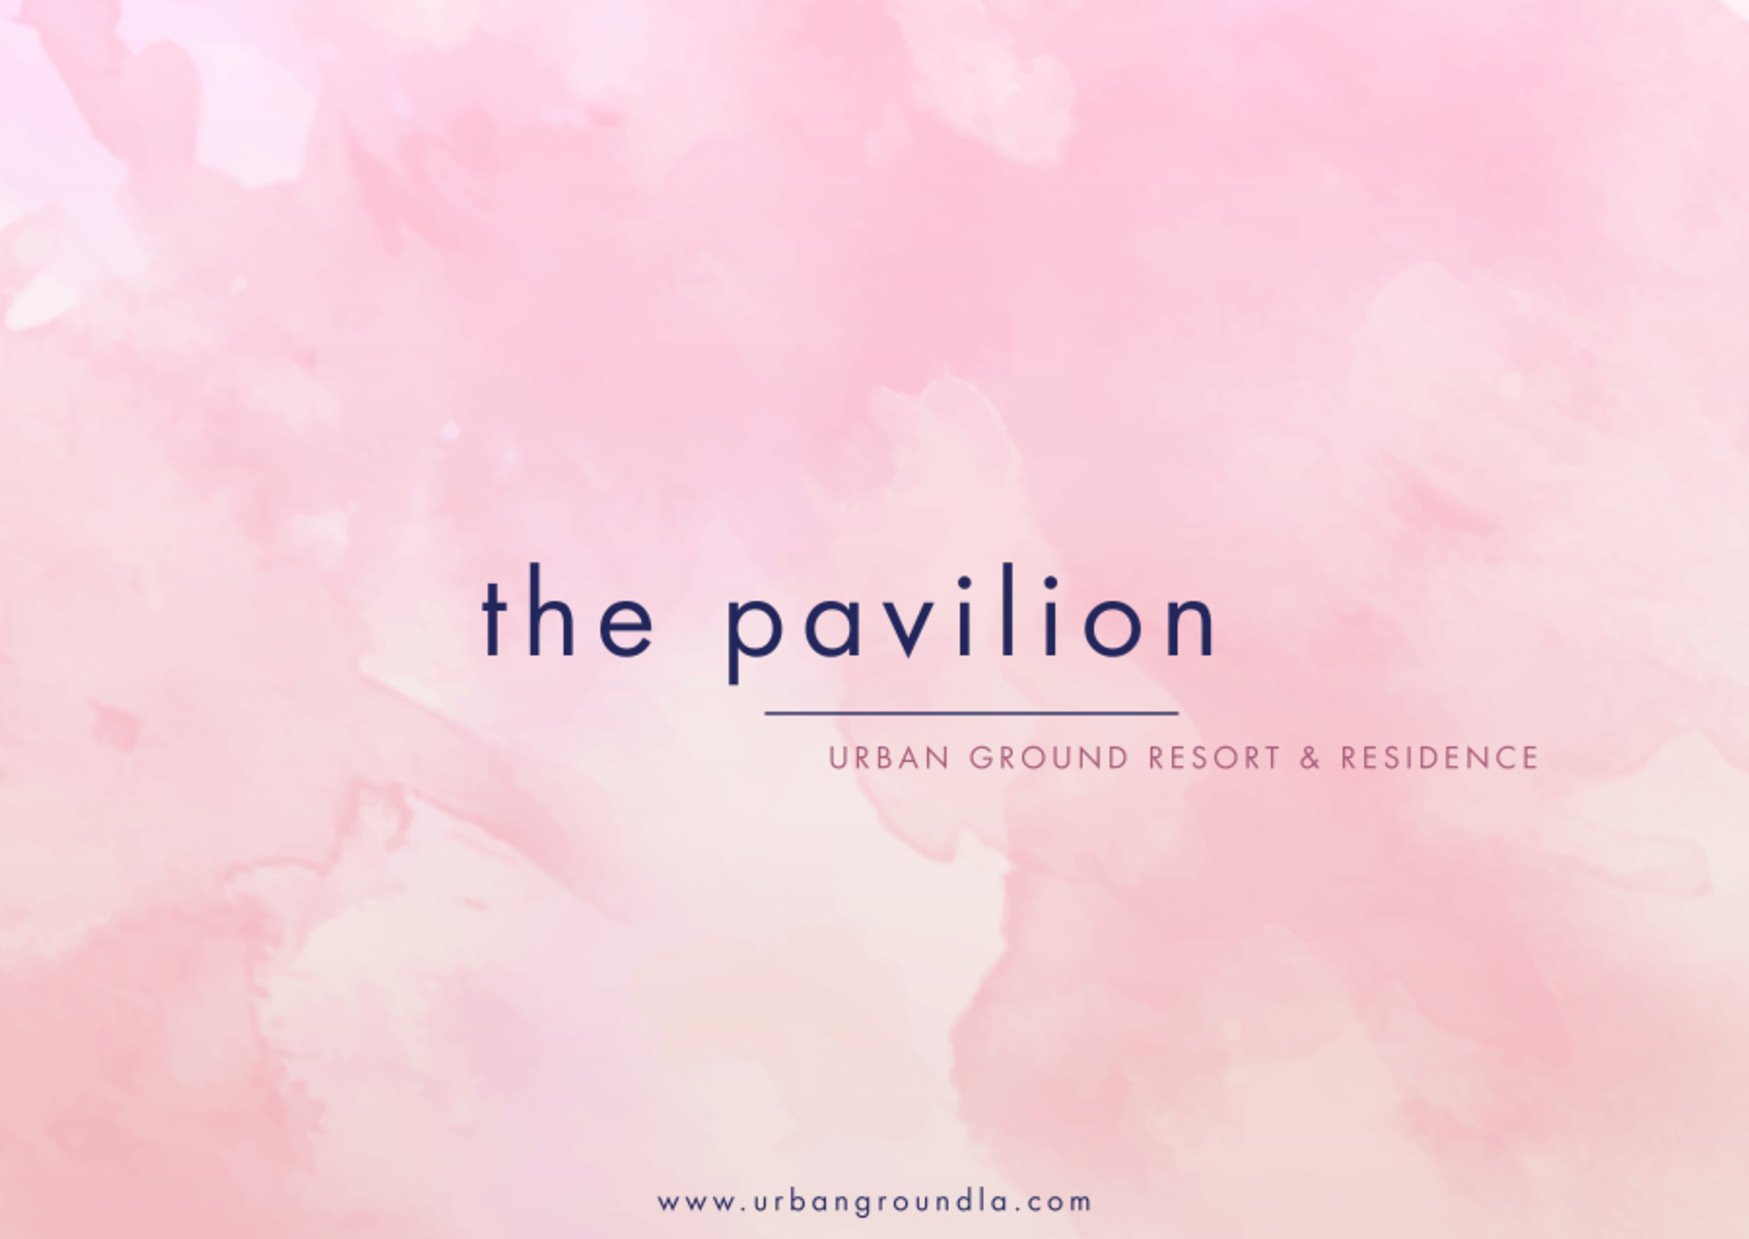 The Pavilion Urban Ground Resort & Residence